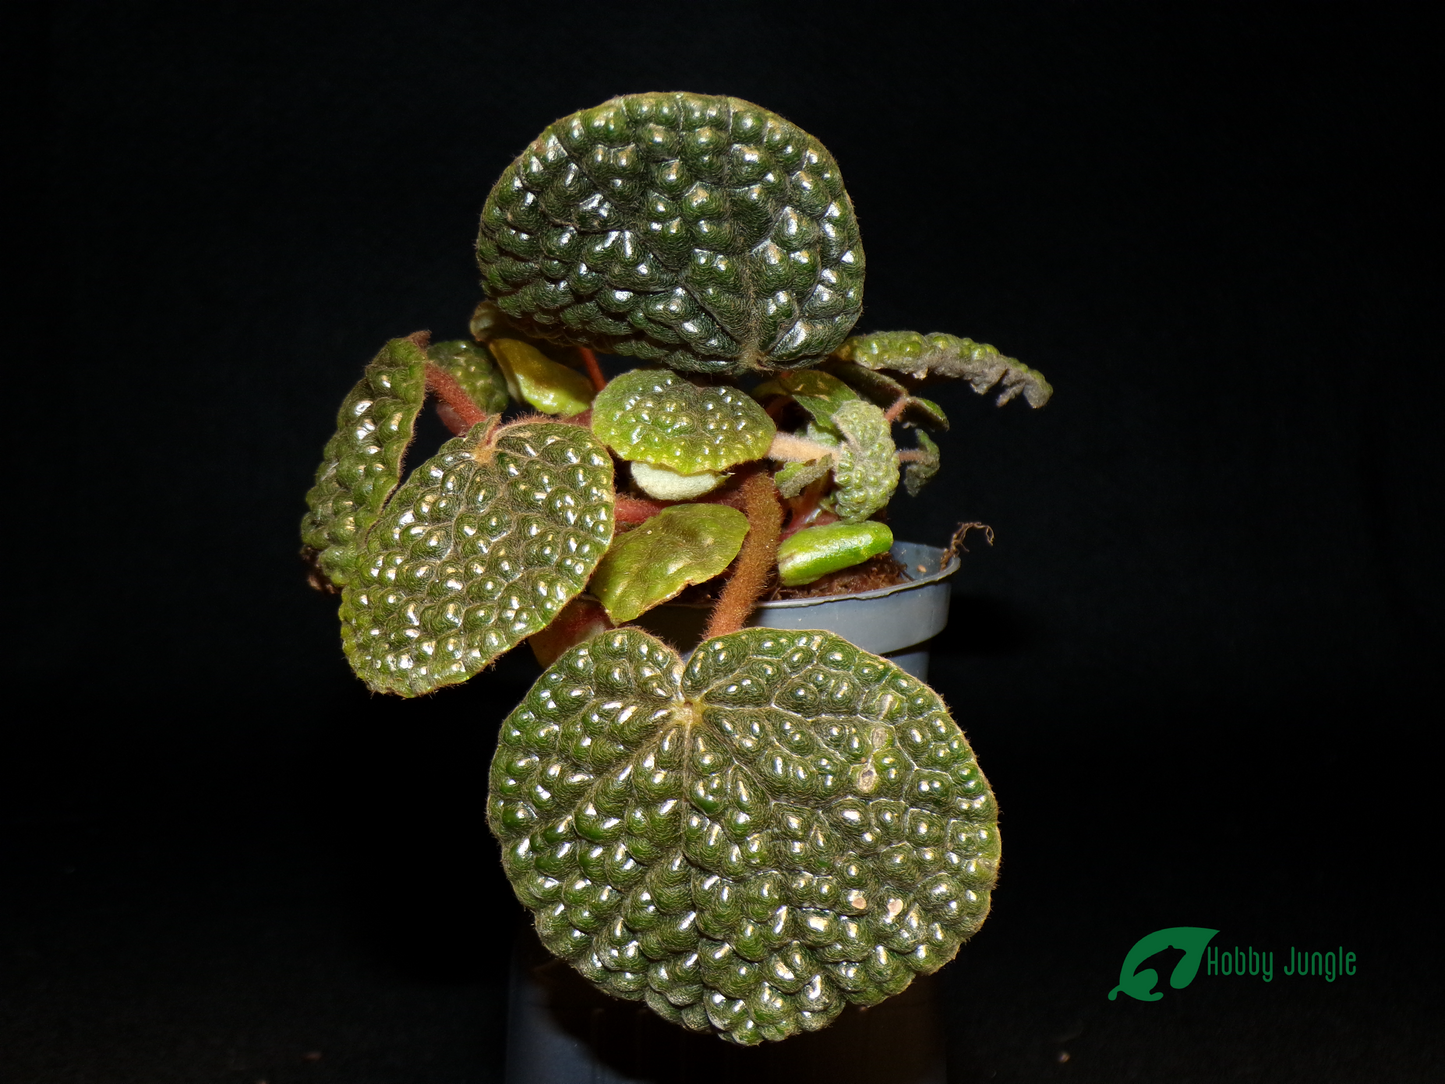 Begonia bullatifolia